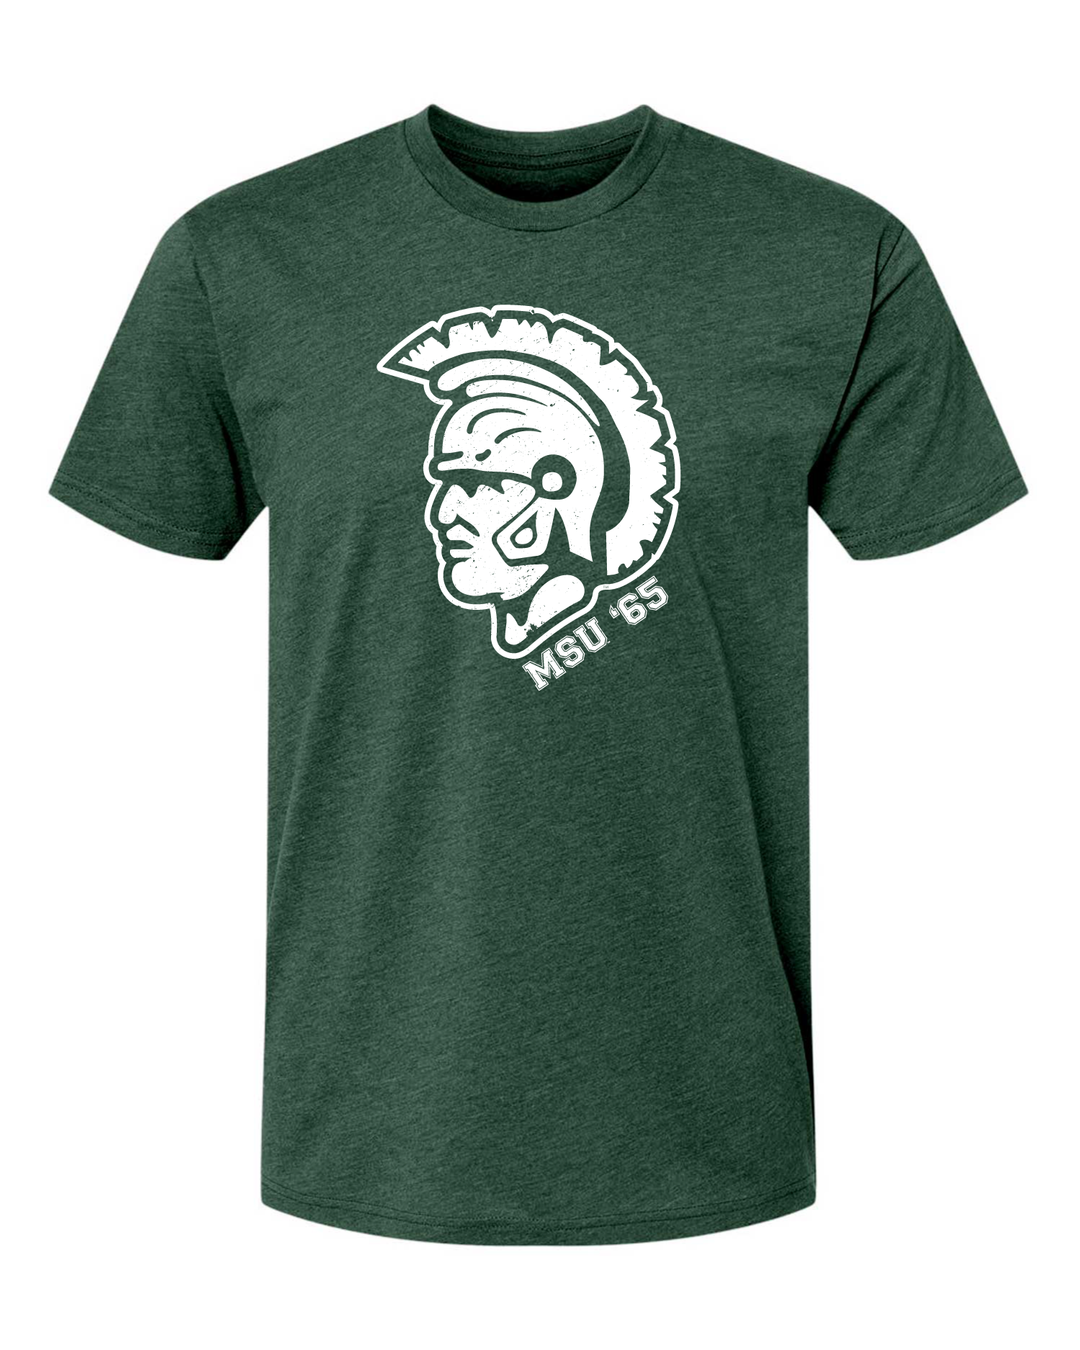 Michigan State Vintage 1965 Spartan Helmet in Green T-Shirt